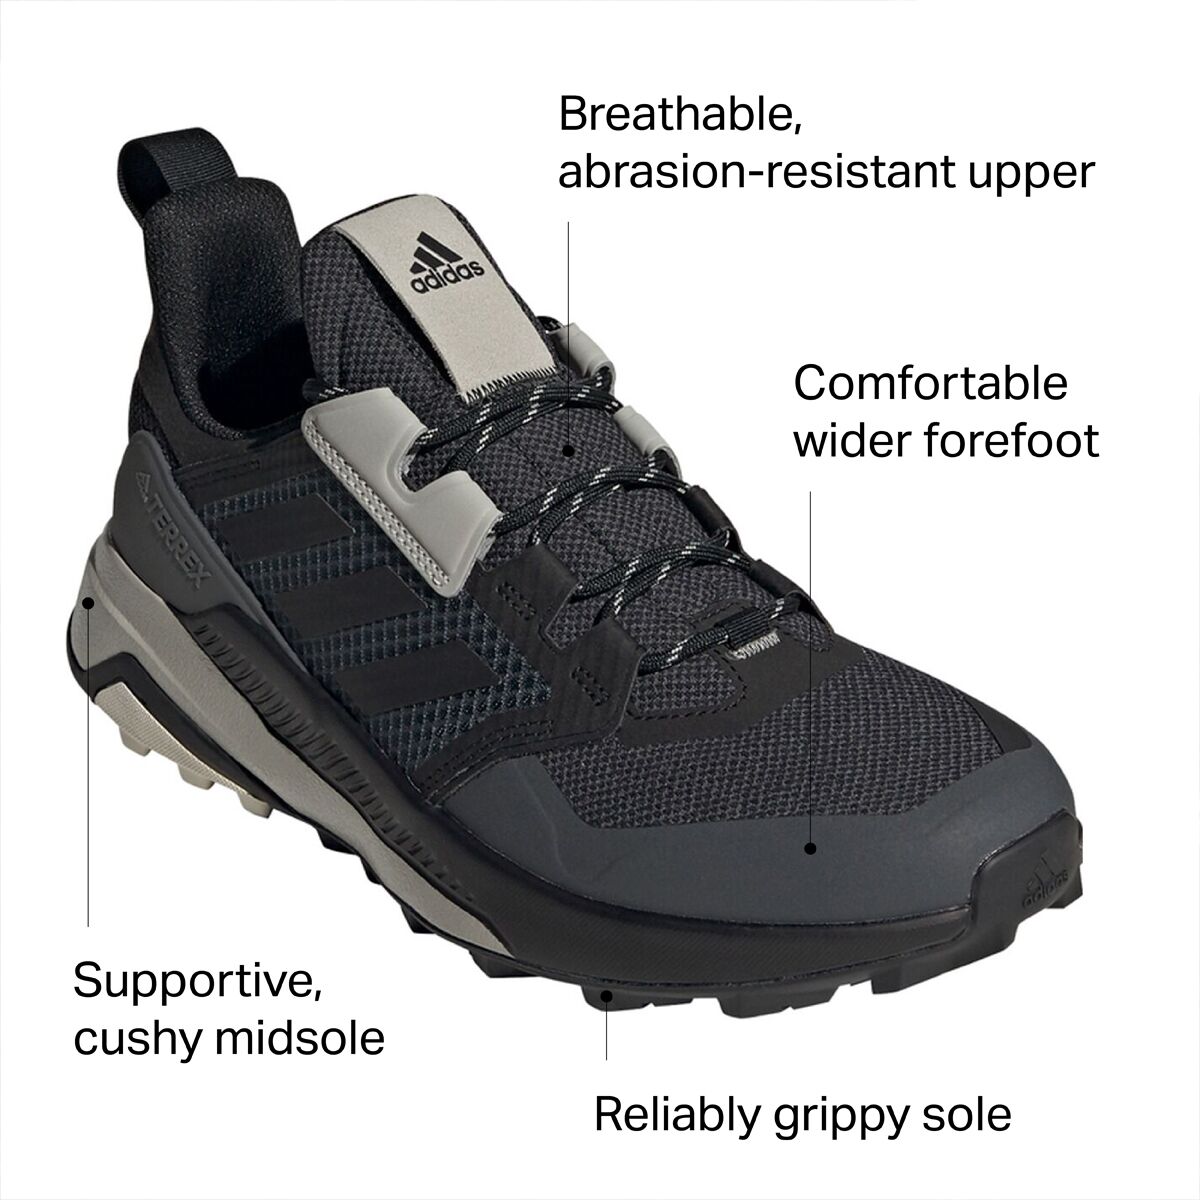 Adidas TERREX Hiking Shoe - Men's - Footwear